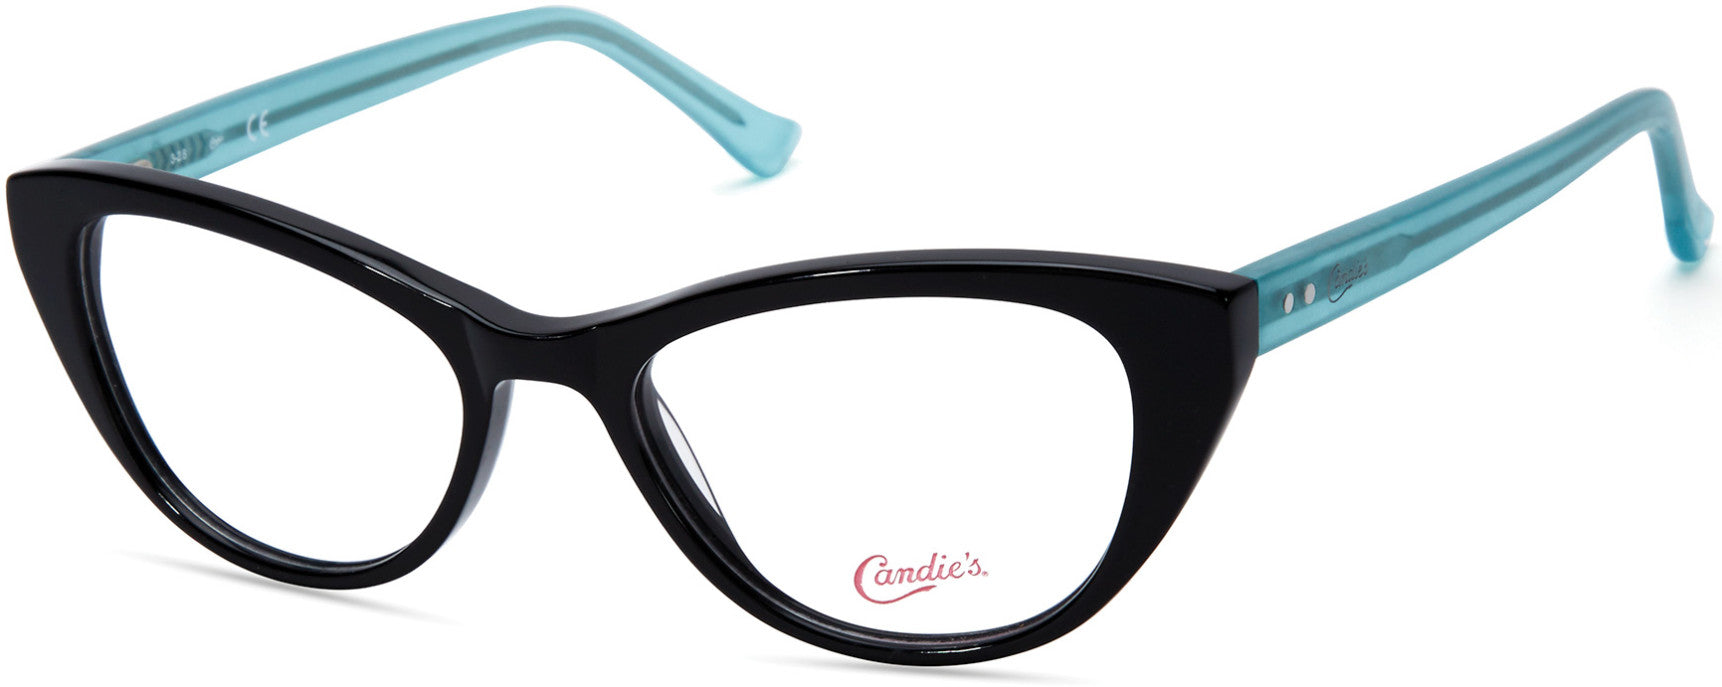 Candies CA0178 Cat Eyeglasses 001-001 - Shiny Black